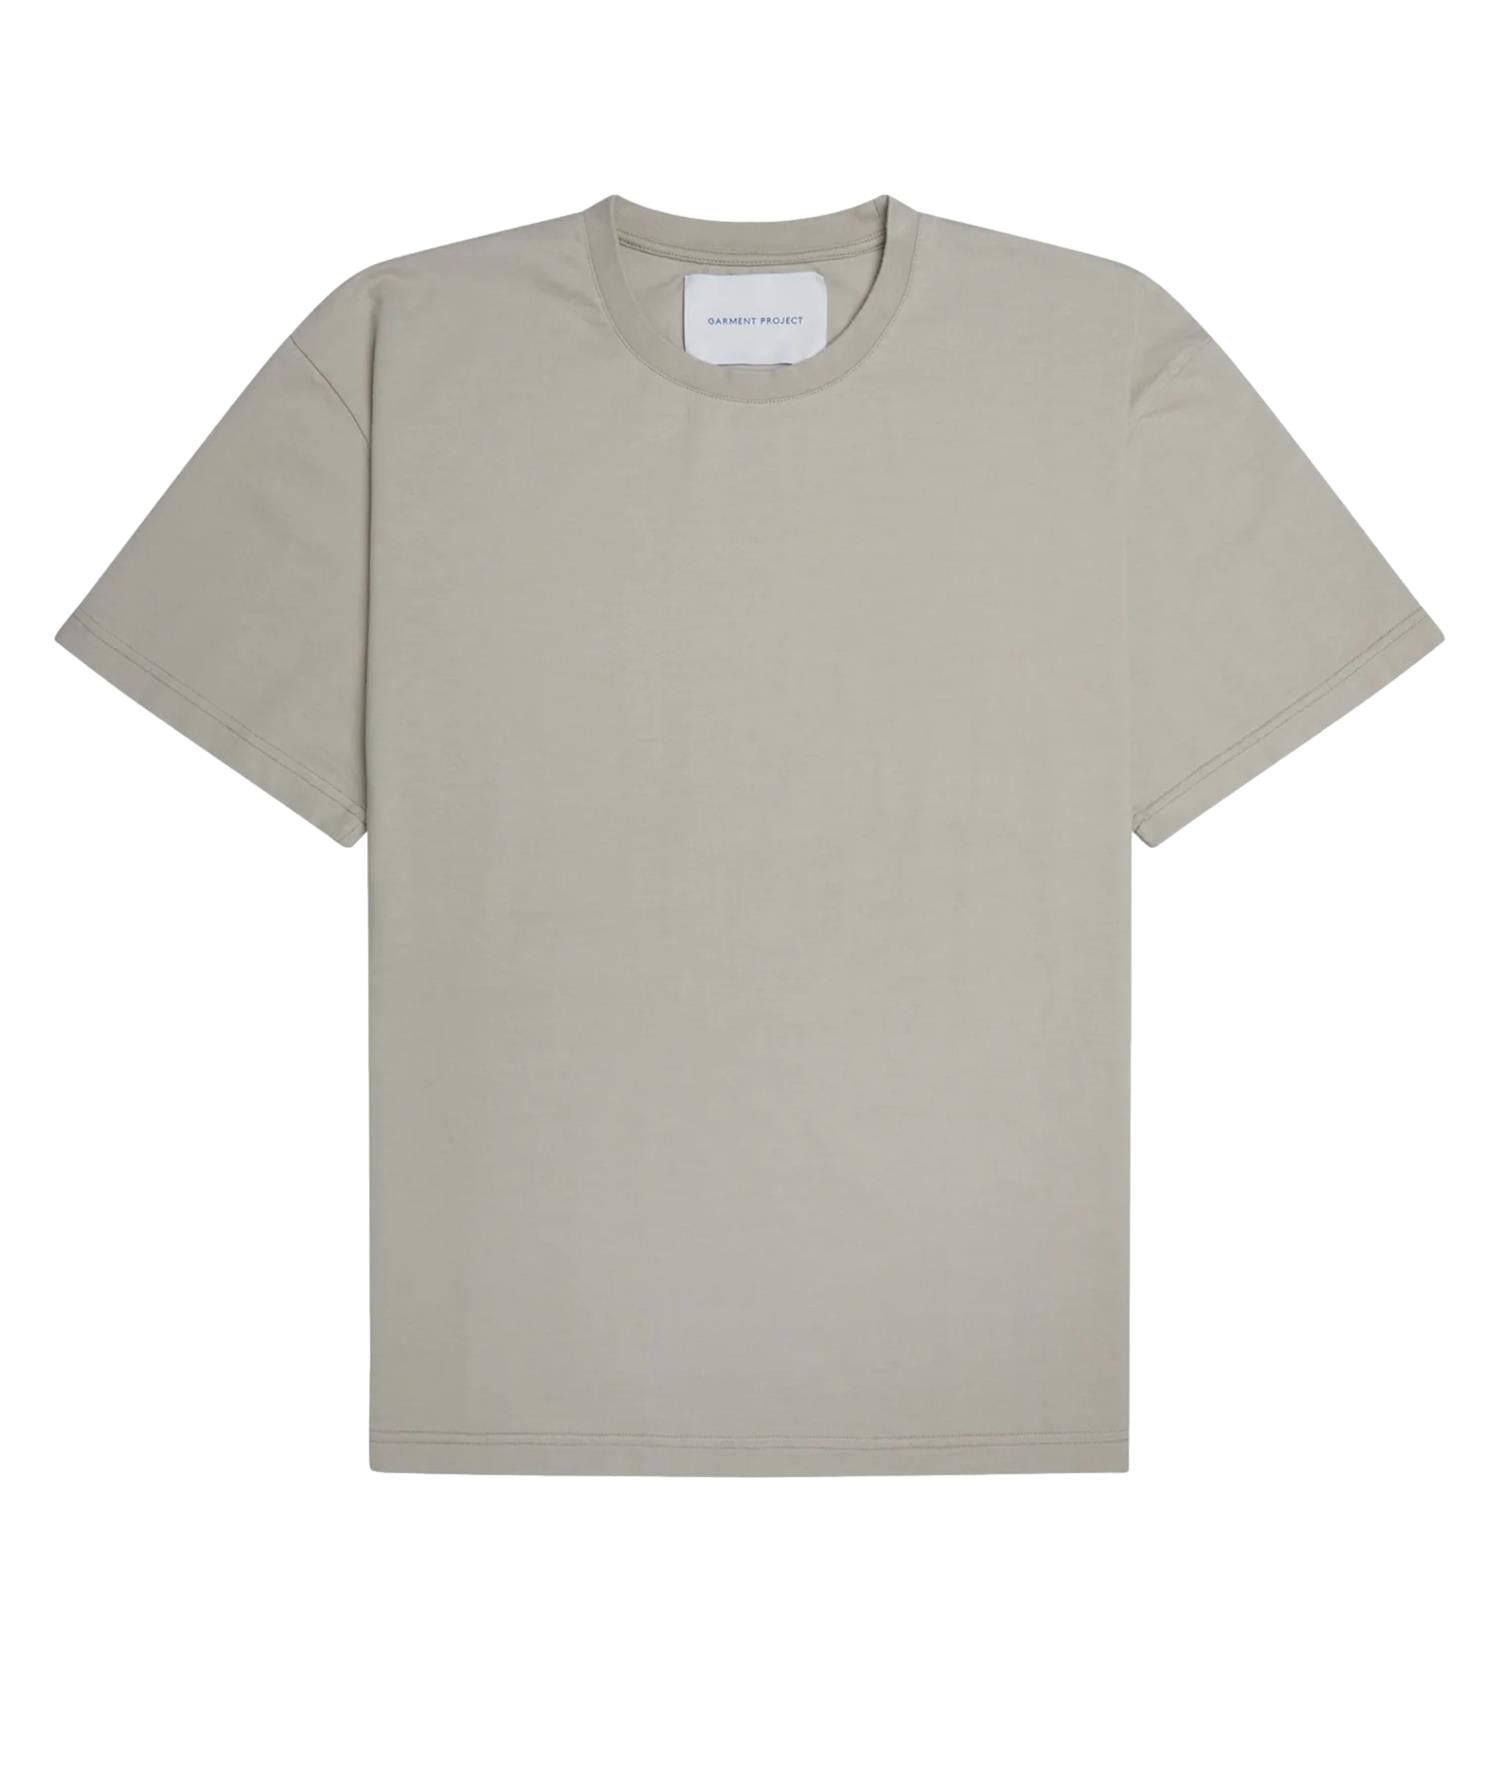 Garment Project GP Heavy Tee T-shirt Sølv - [modostore.no]